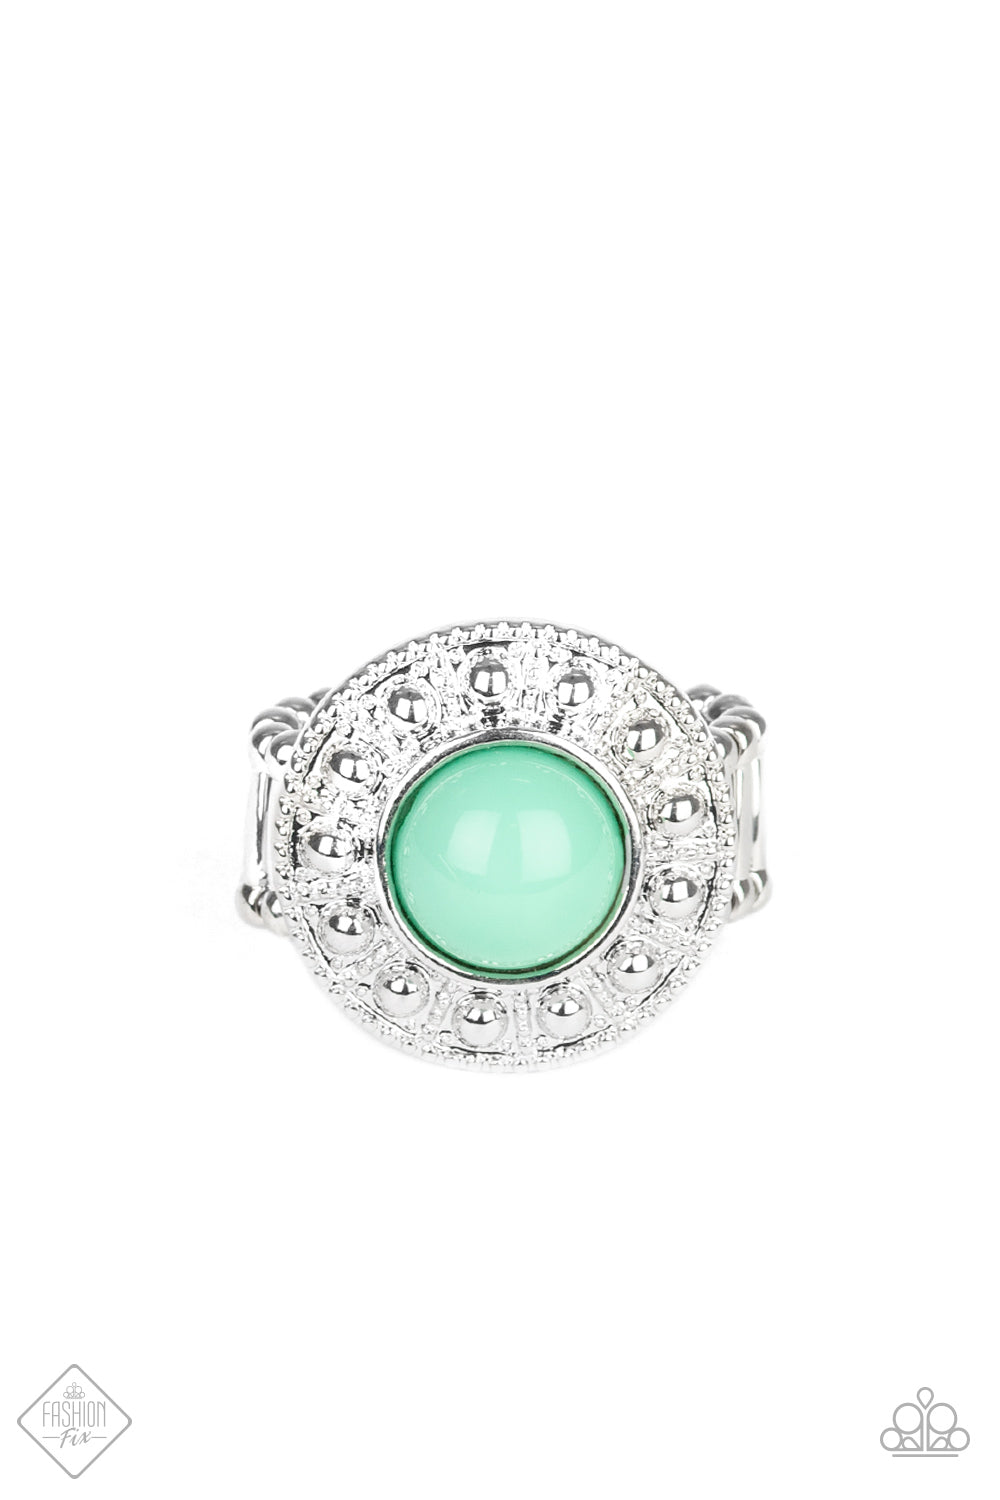 Treasure Chest Shimmer Green Ring